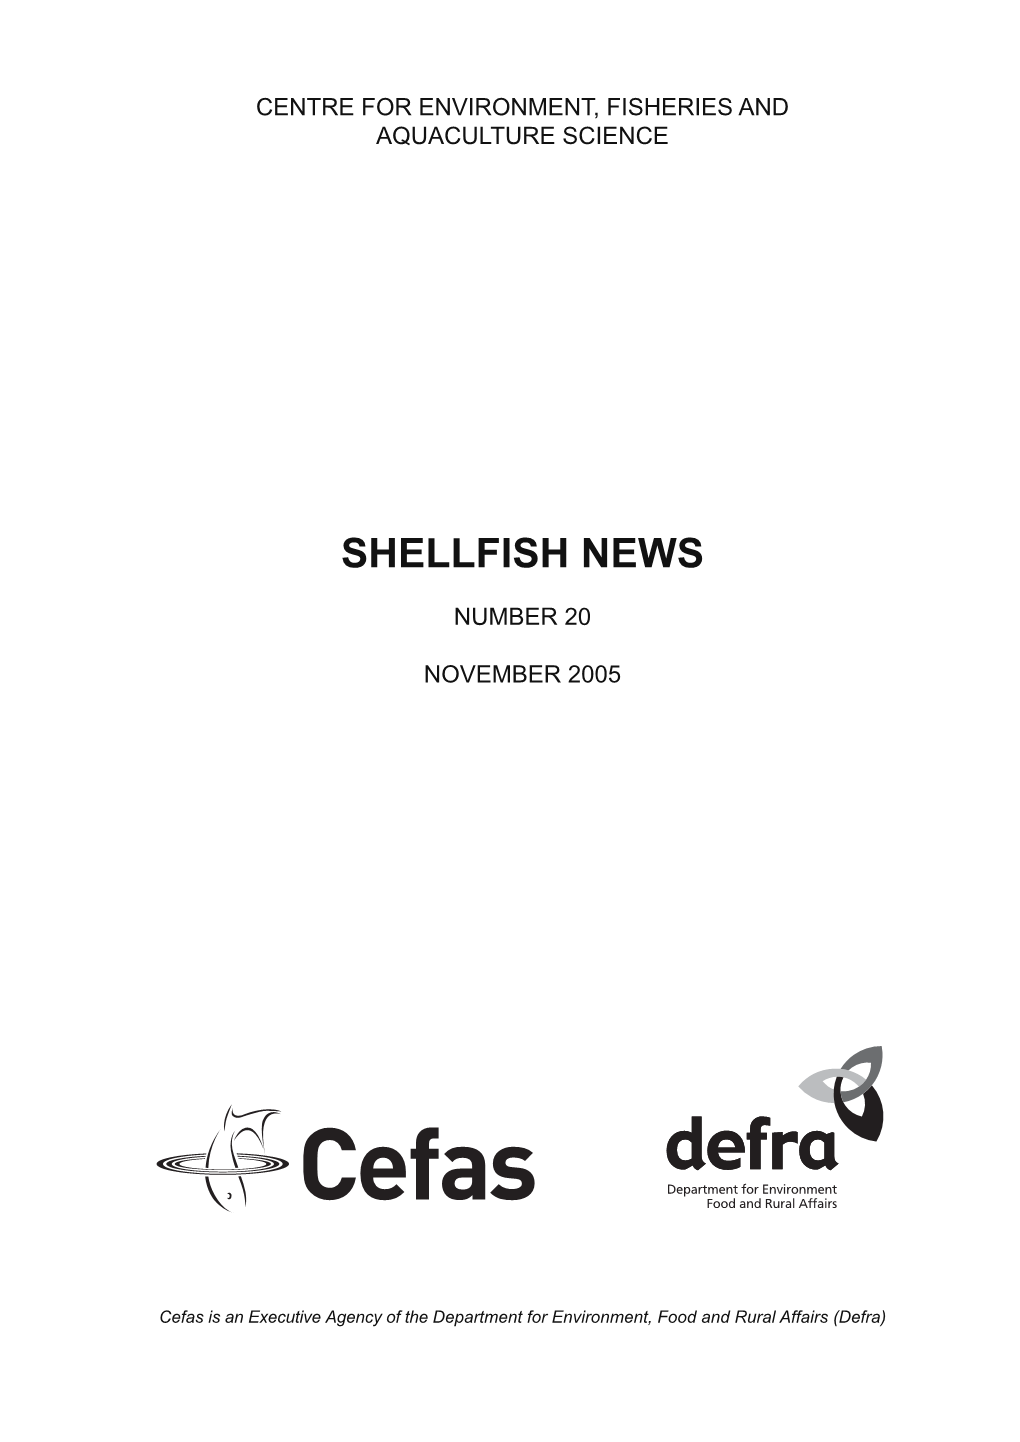 Shellfish News